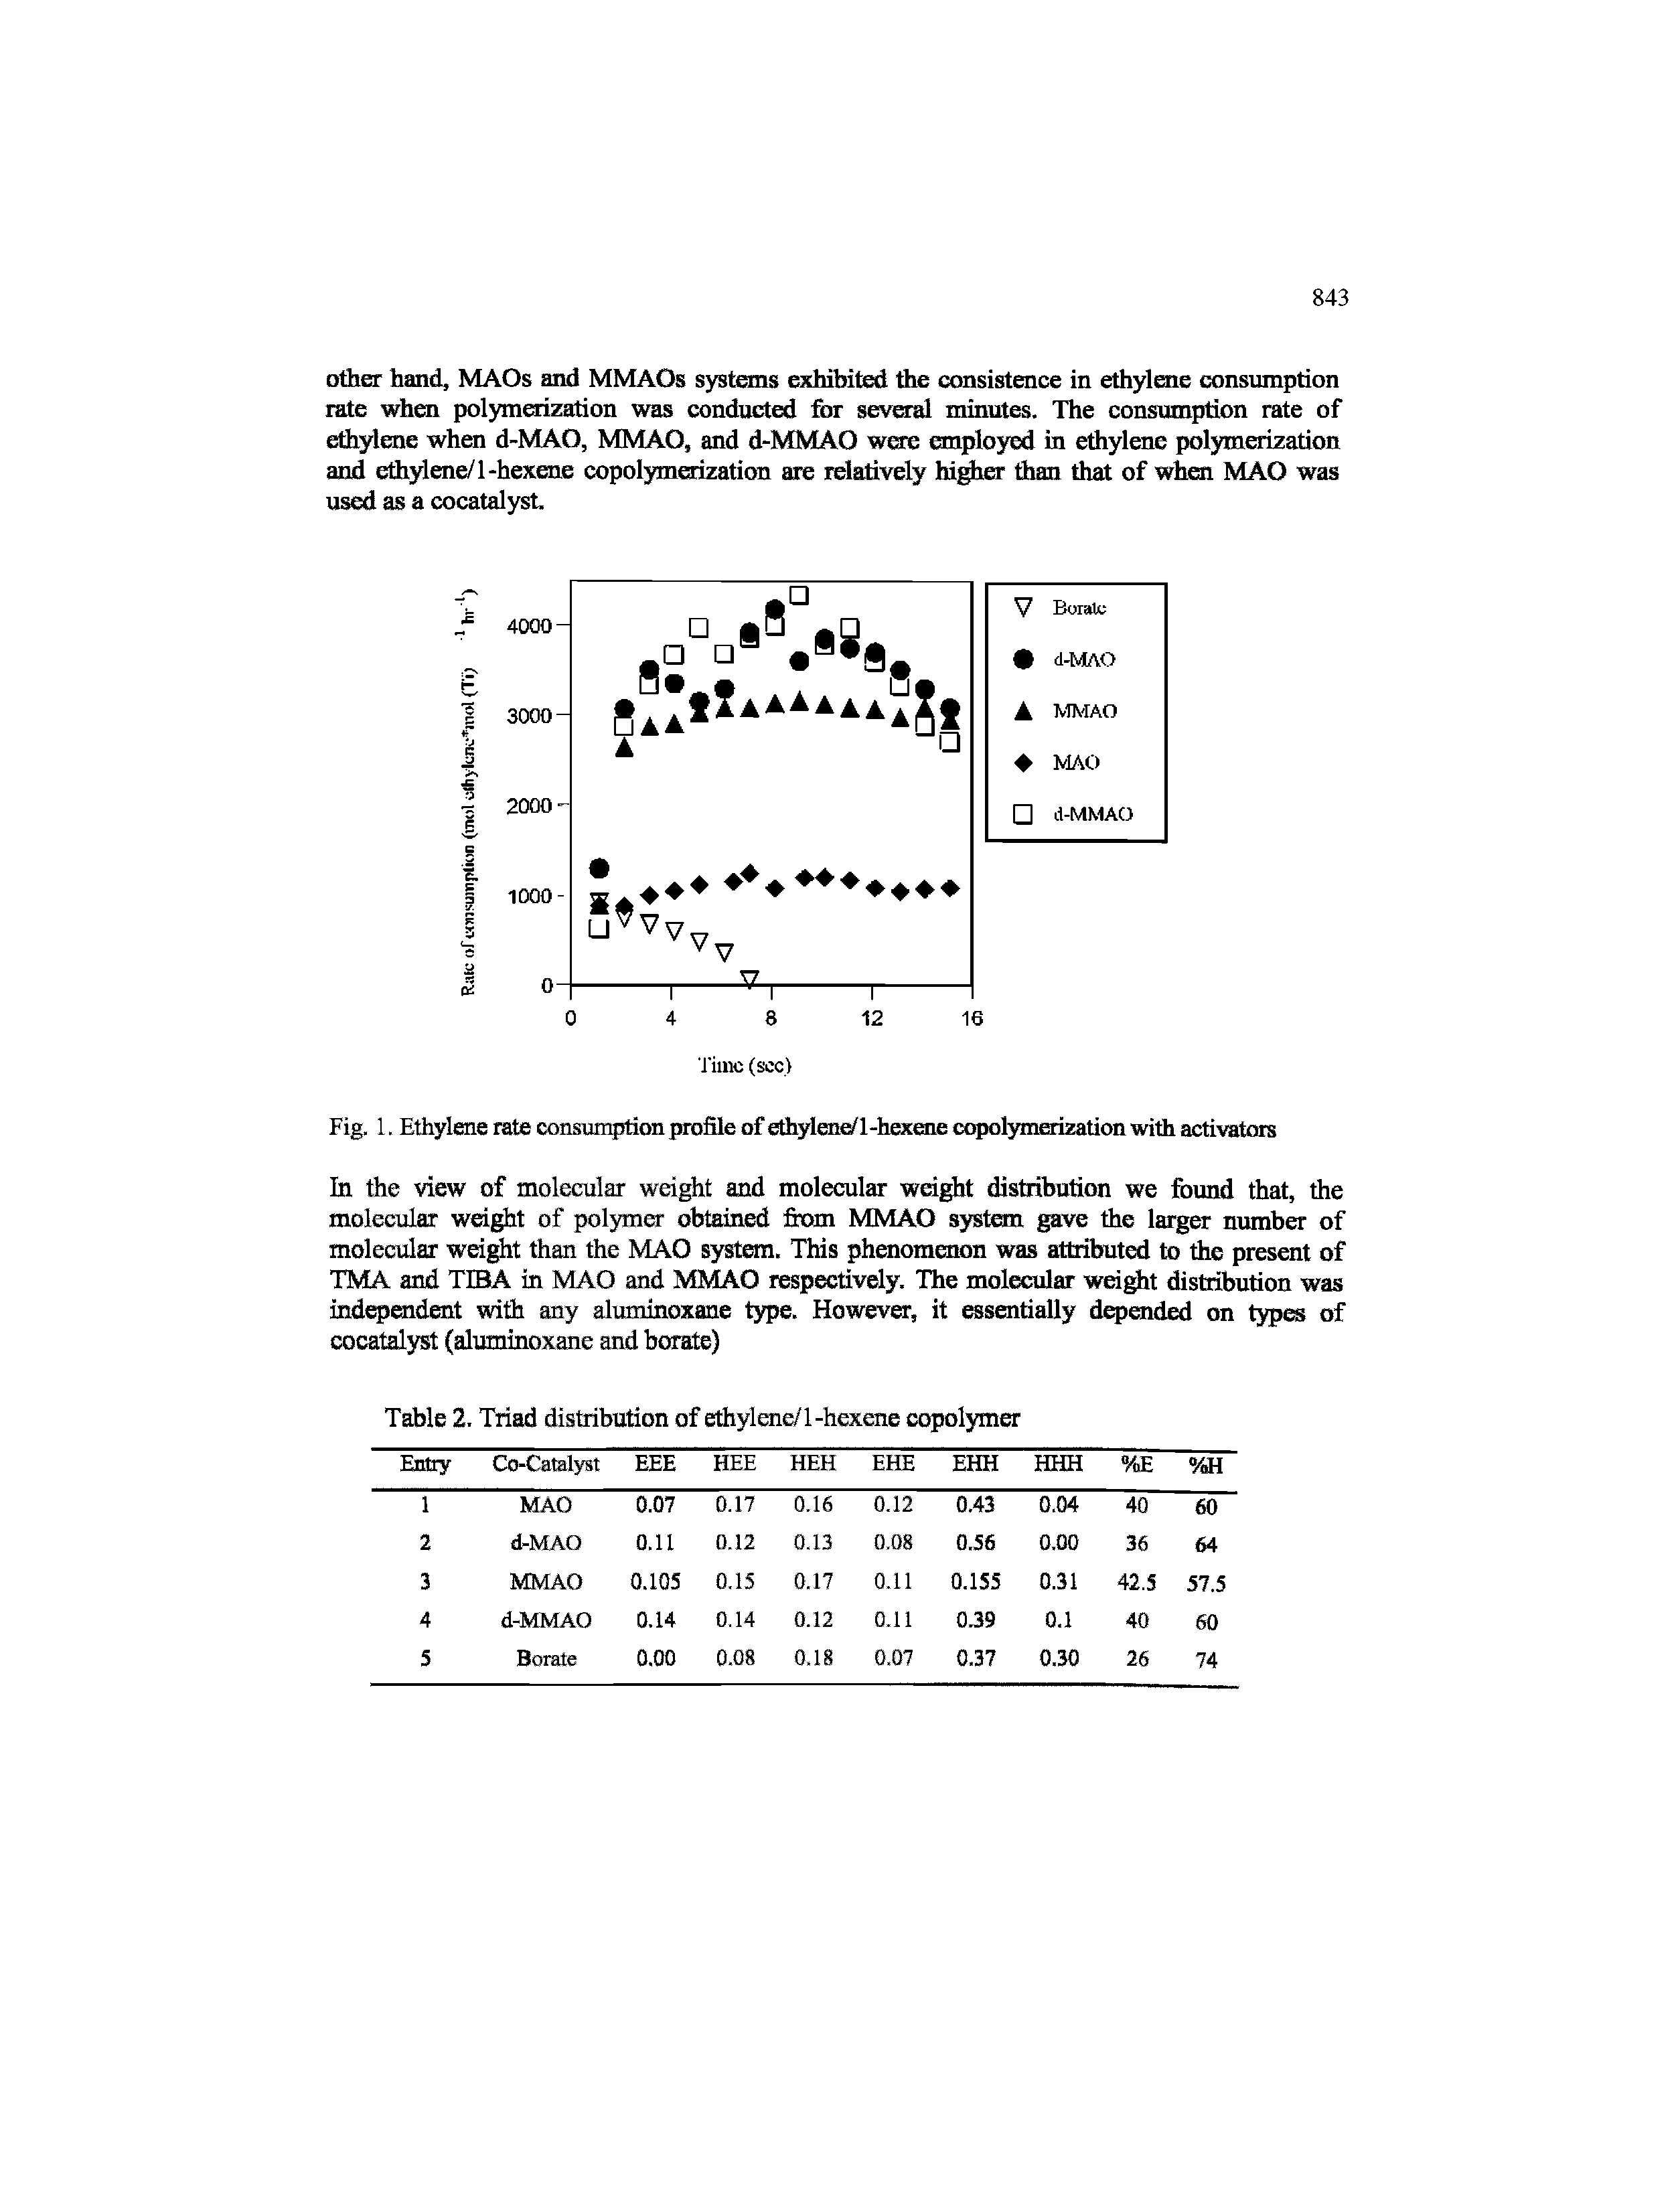 Table 2. Triad distribution of ethylene/1-hexene copolymer...